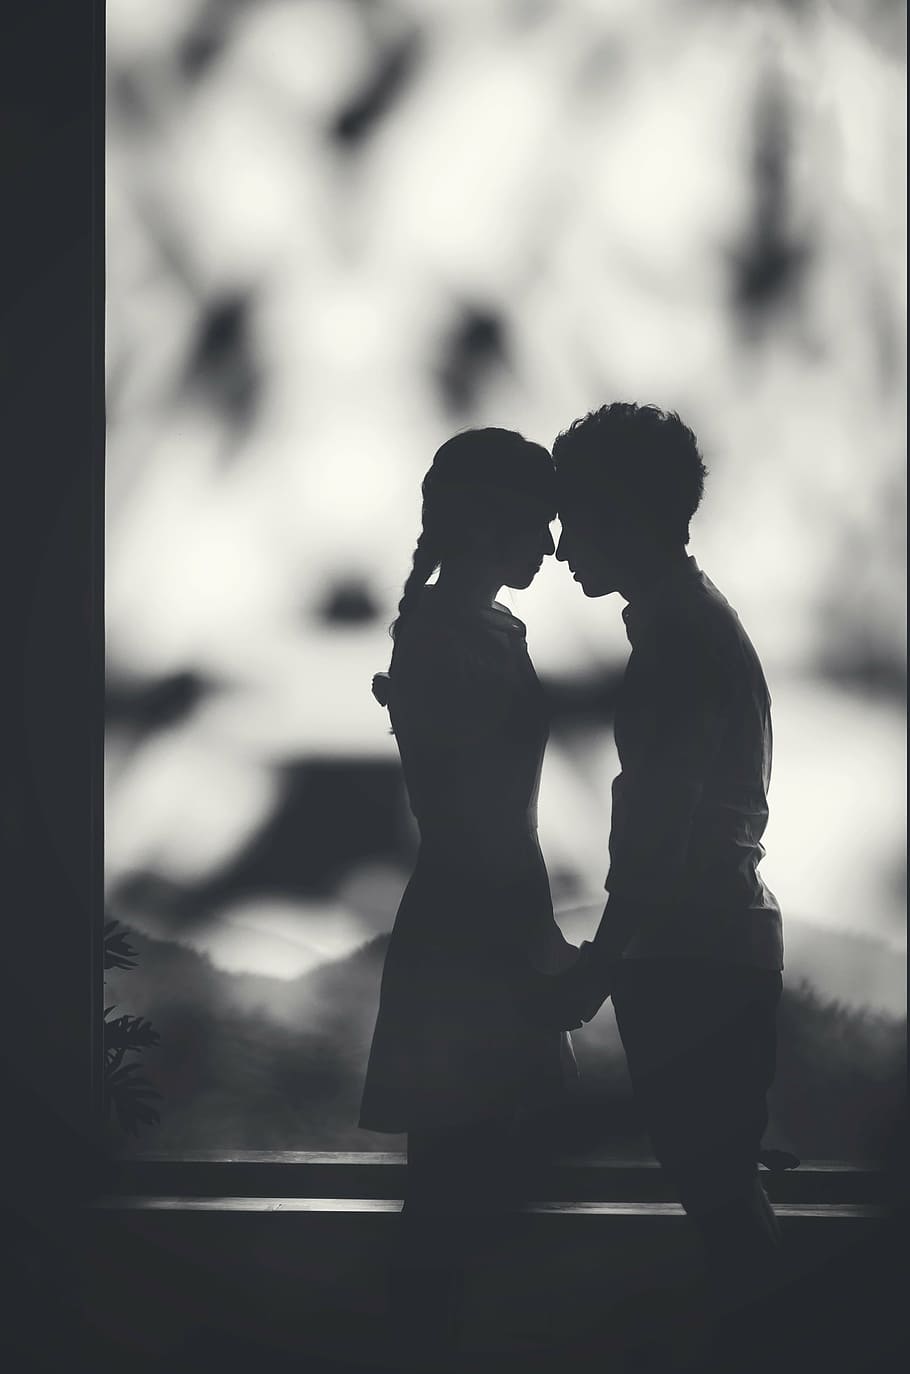 HD wallpaper: silhouette of couple grayscale photo, black, white, love, man  | Wallpaper Flare